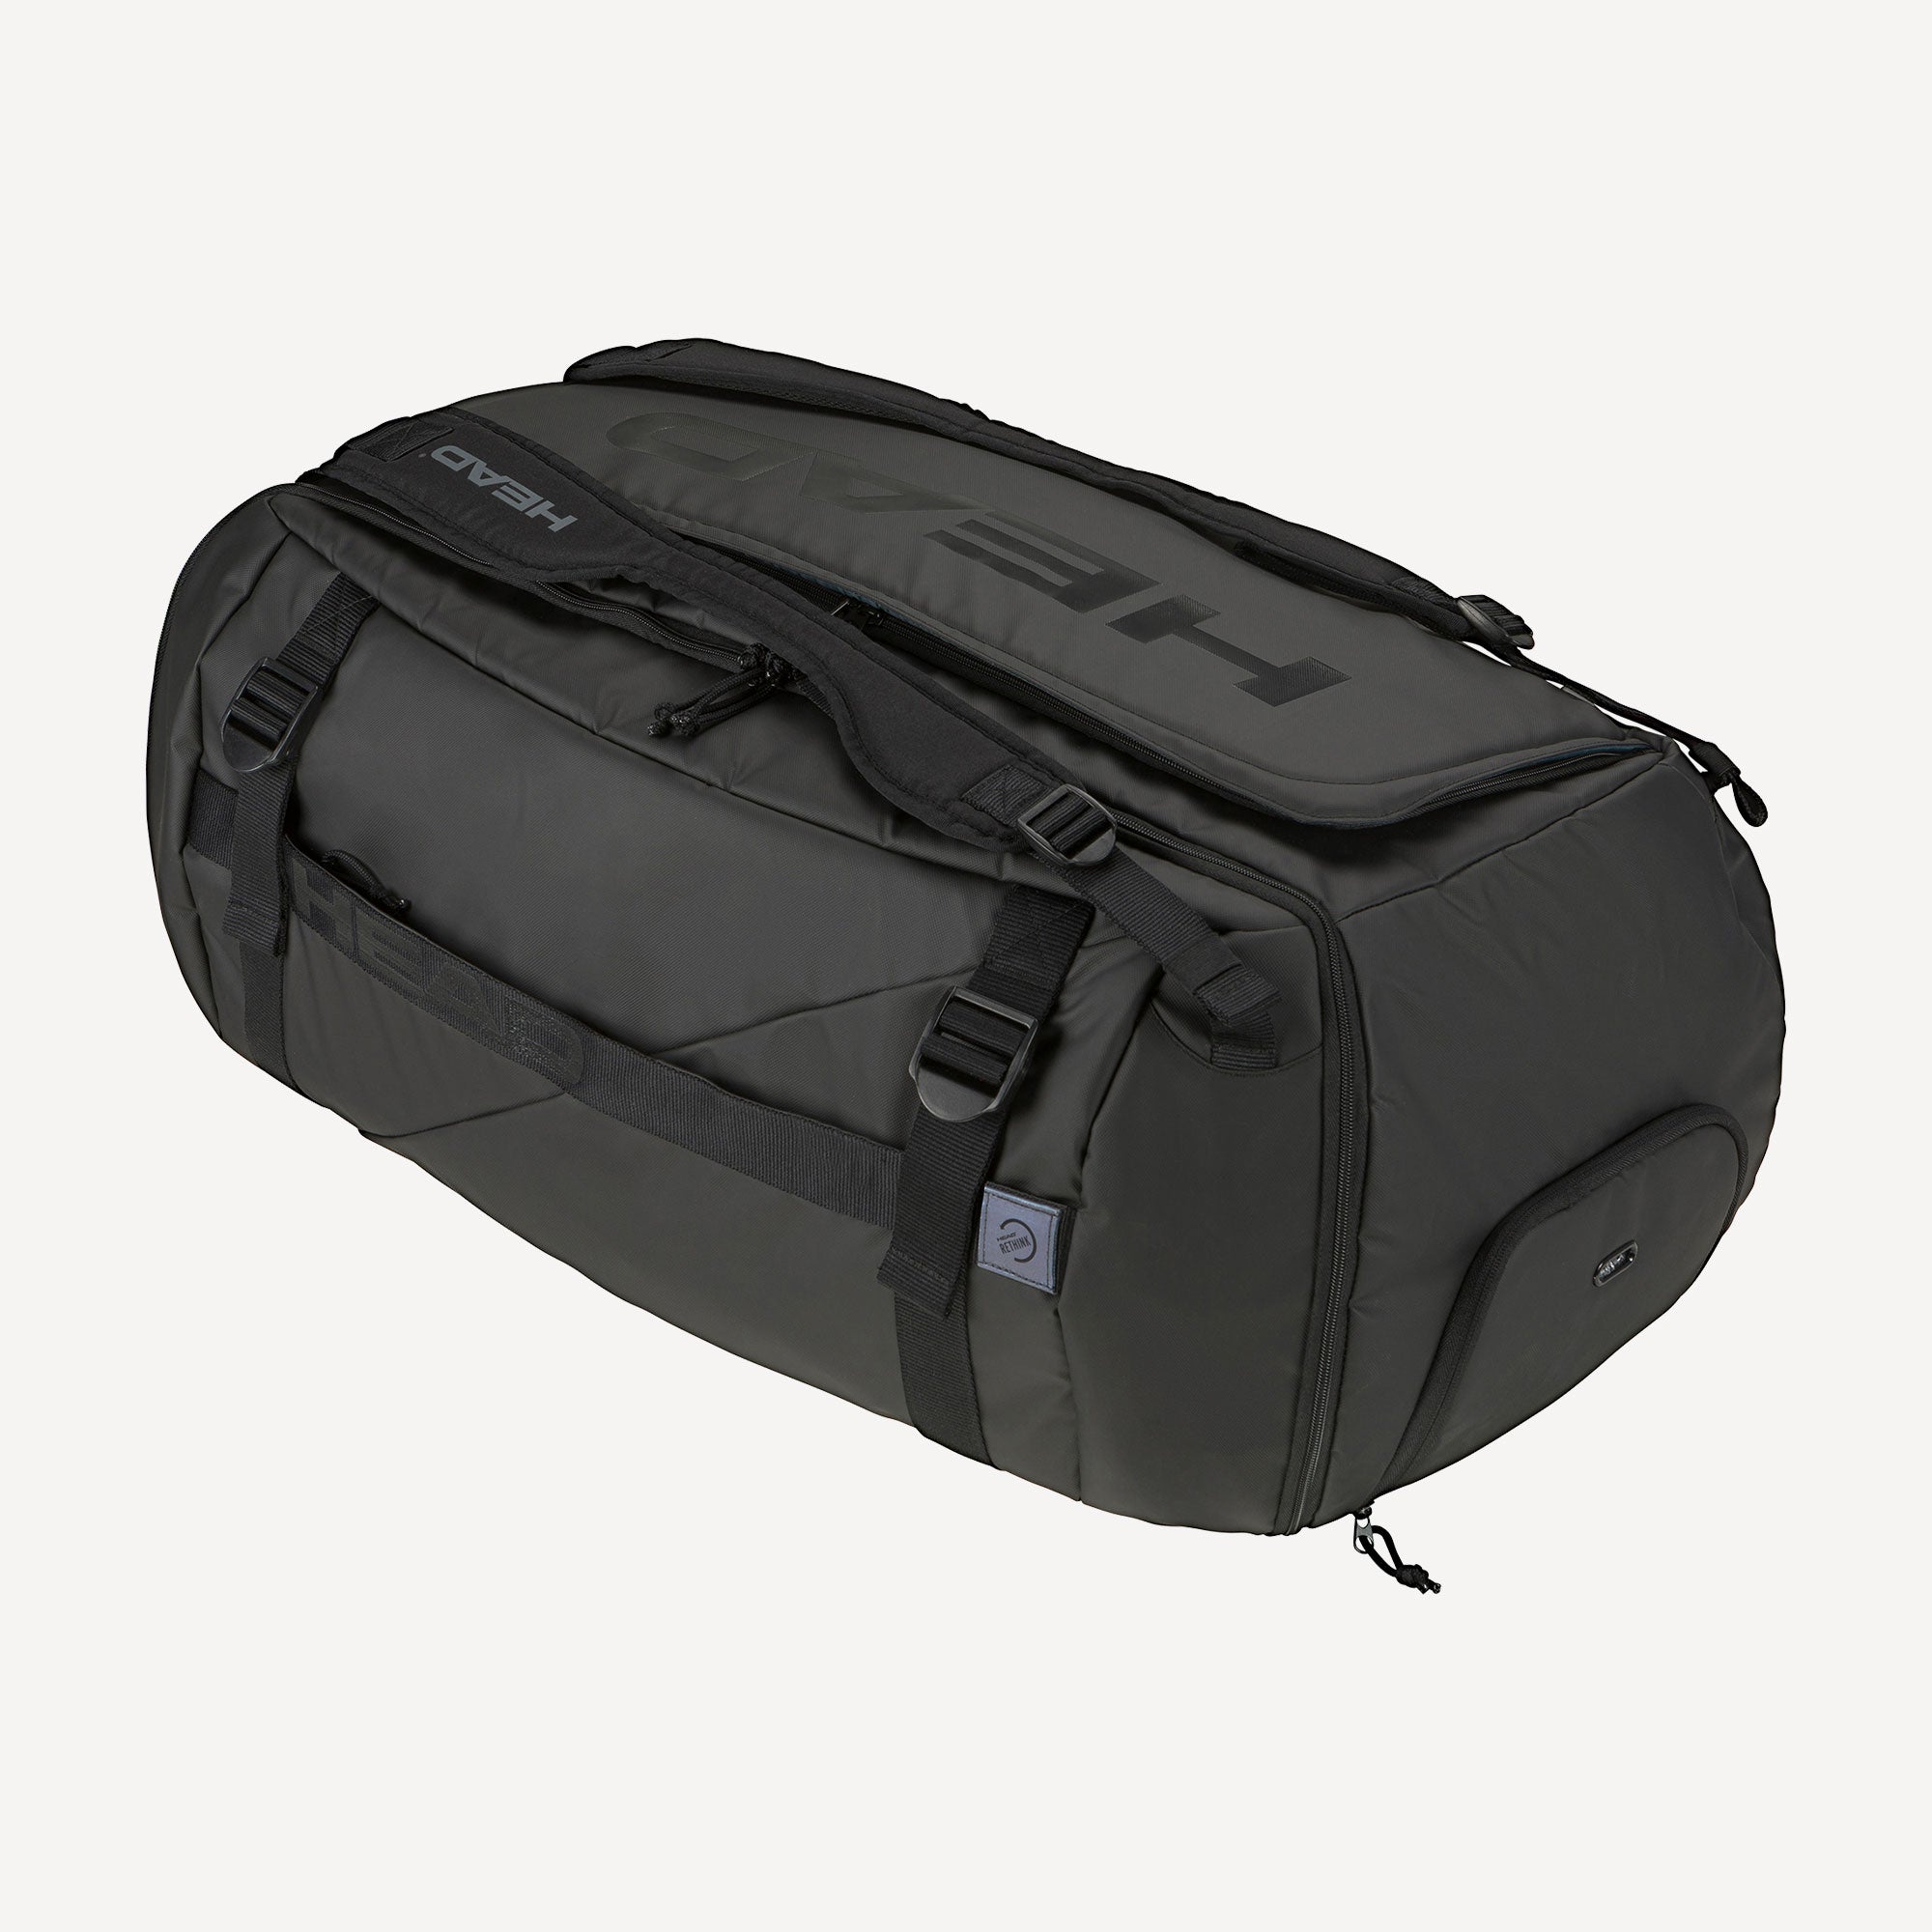 HEAD Gravity Pro Tennis Duffle Bag XL Black (1)